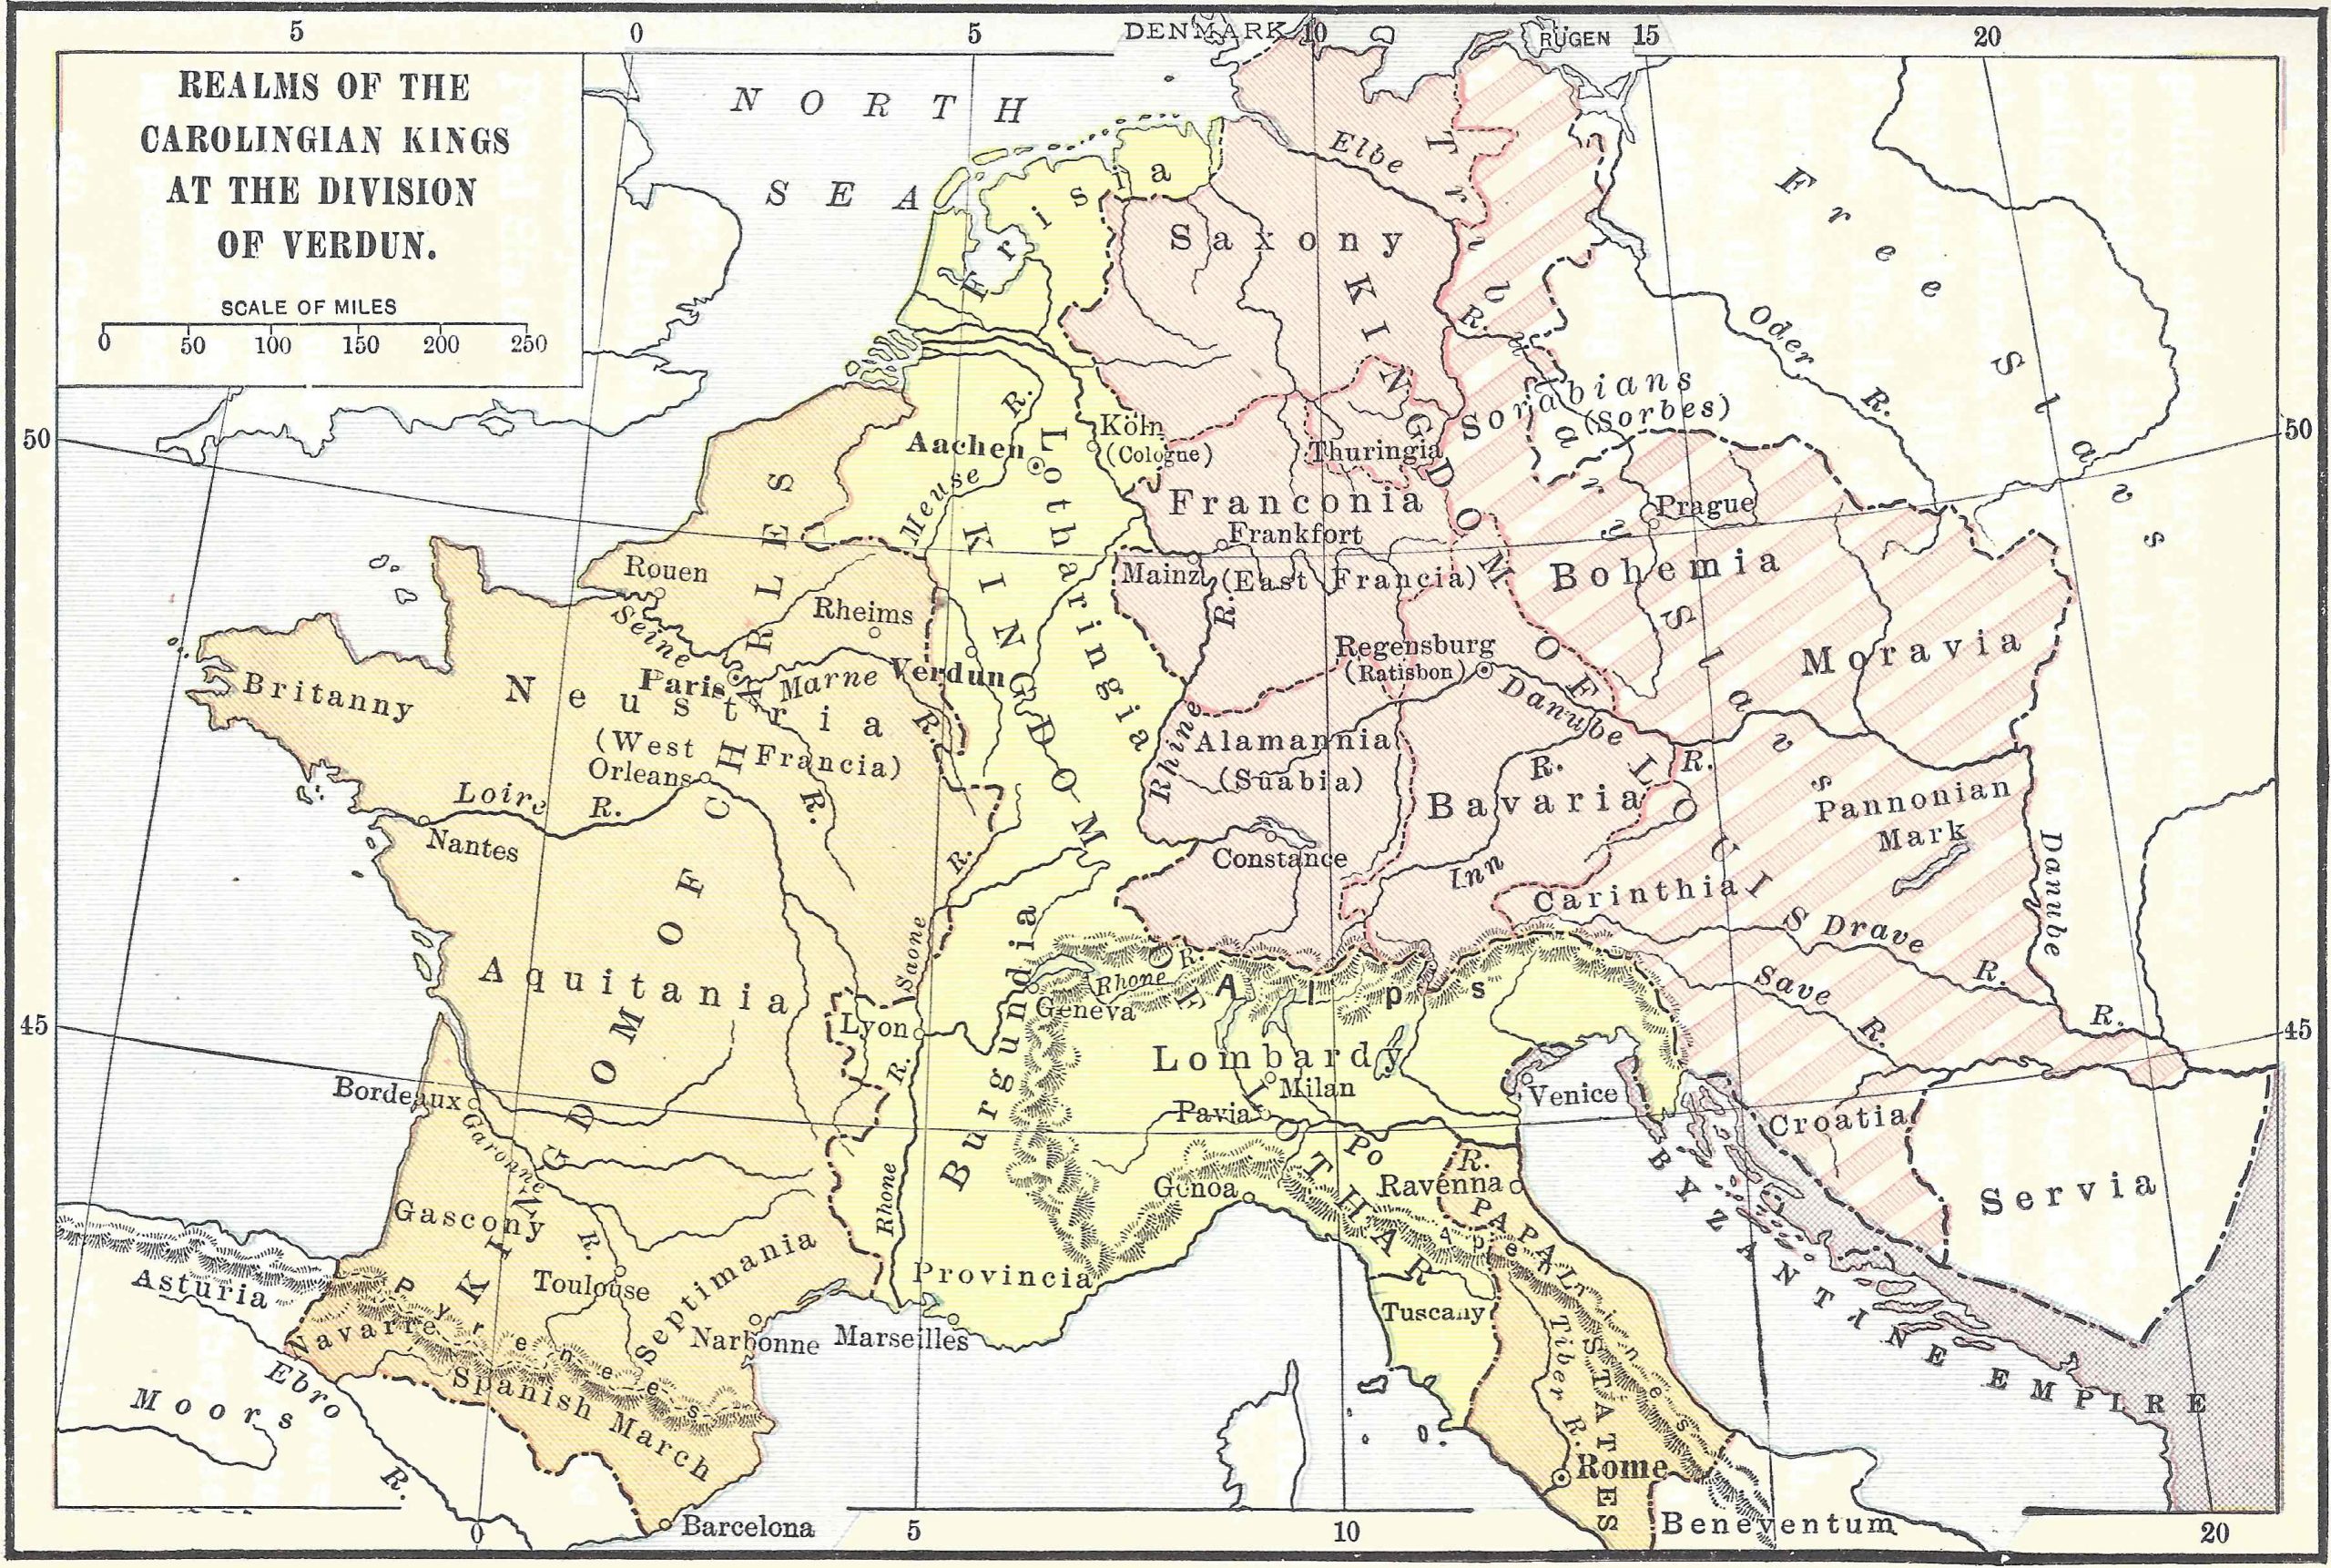 Realms of the Carolingian Kings at the Division of Verdun